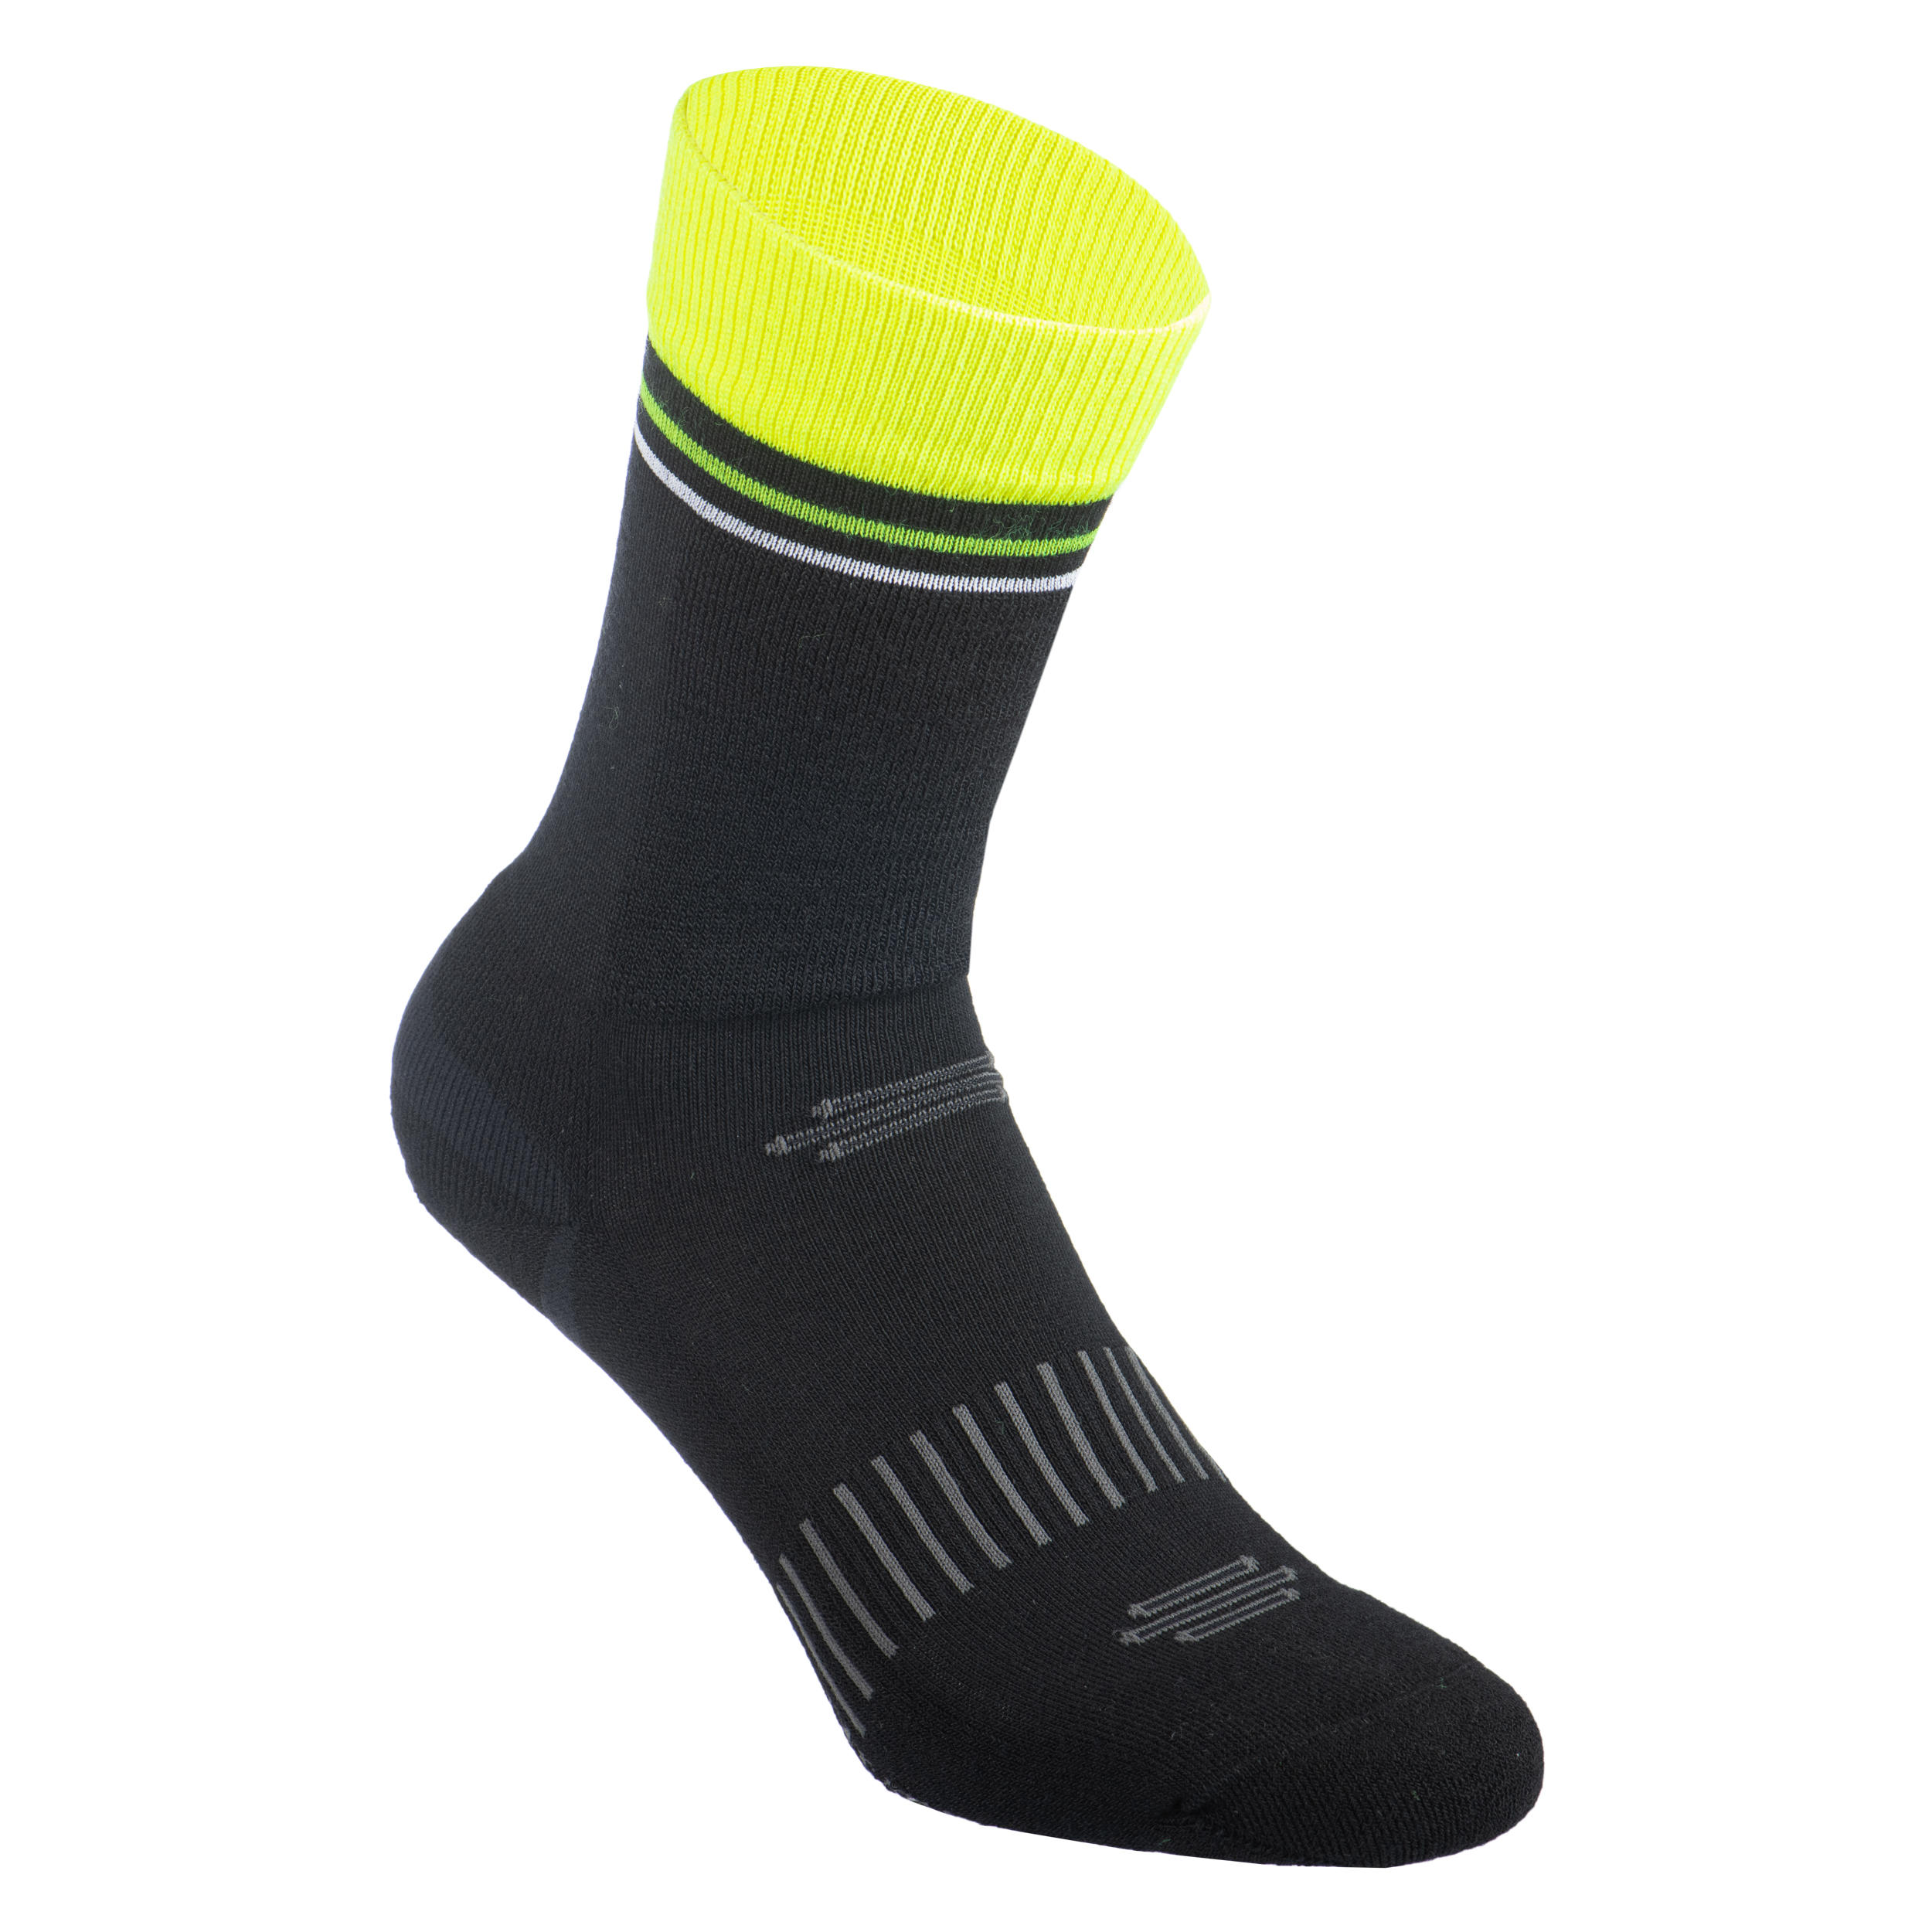 900 Winter Cycling Socks - Black/Yellow 1/3